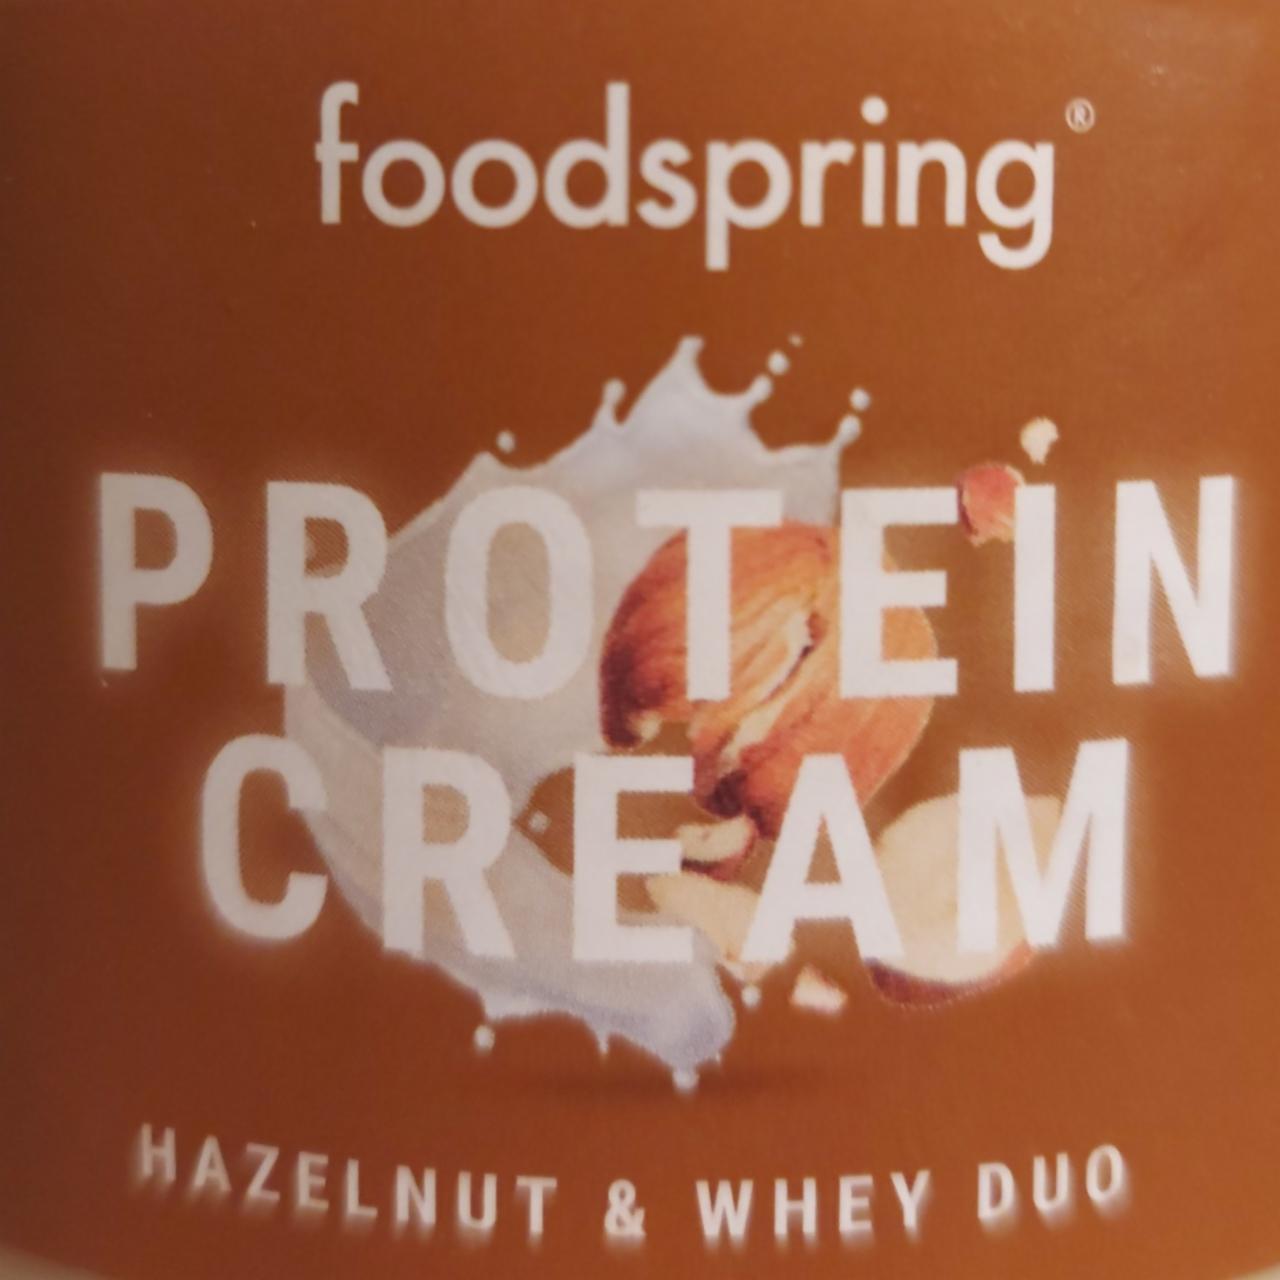 Fotografie - Protein cream Hazelnut & whey duo Foodspring